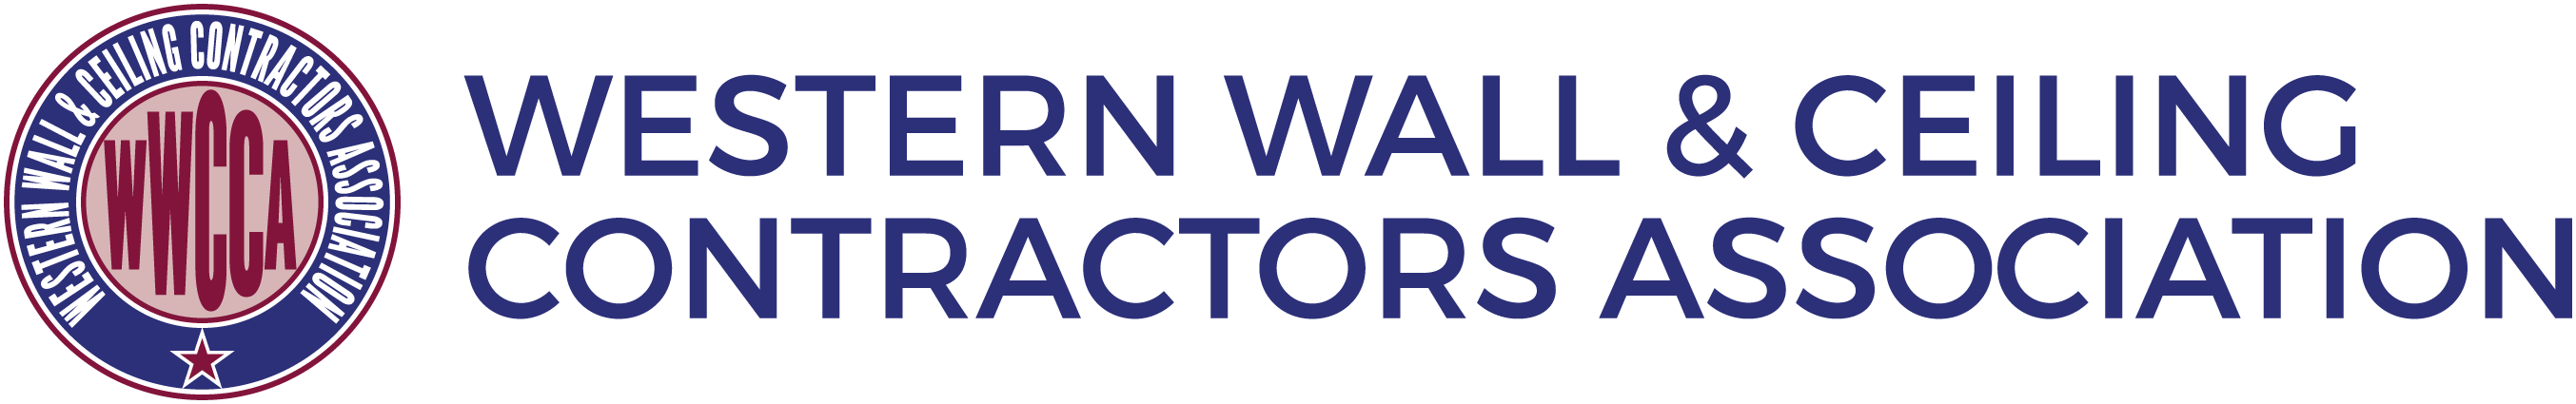 Western Wall & Ceiling Contractors Association, Inc Logo